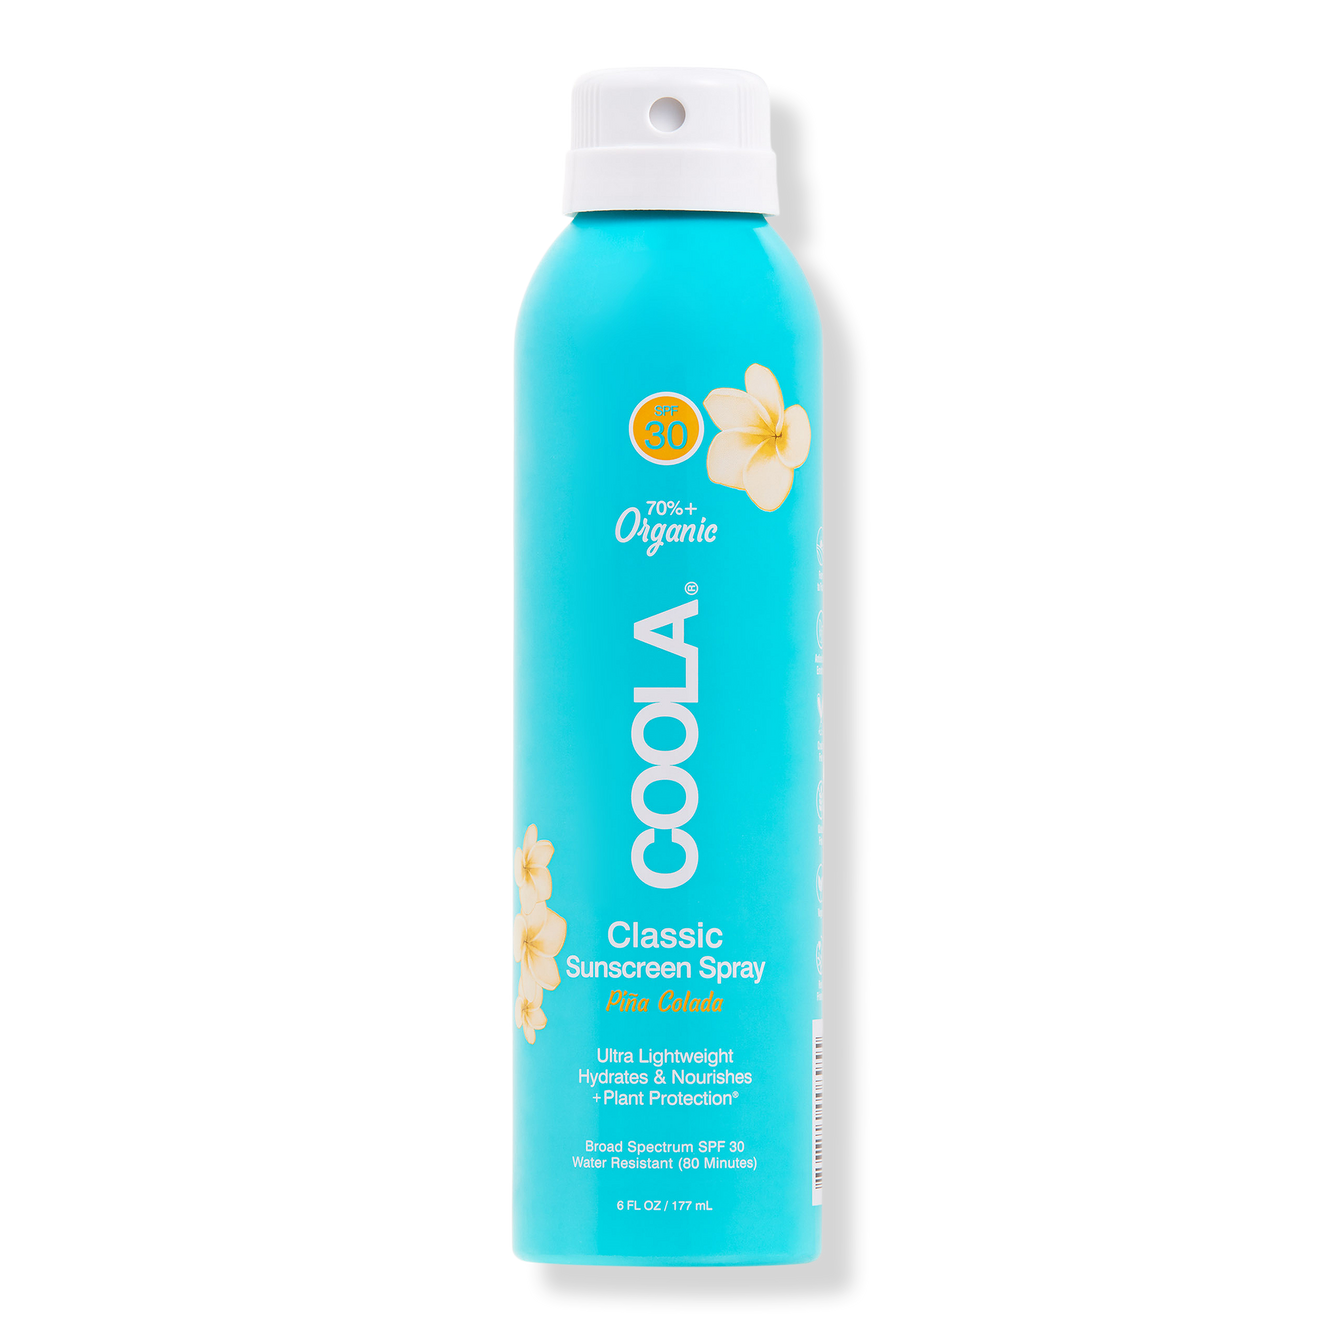 Classic Sunscreen Spray SPF 30 Pina Colada